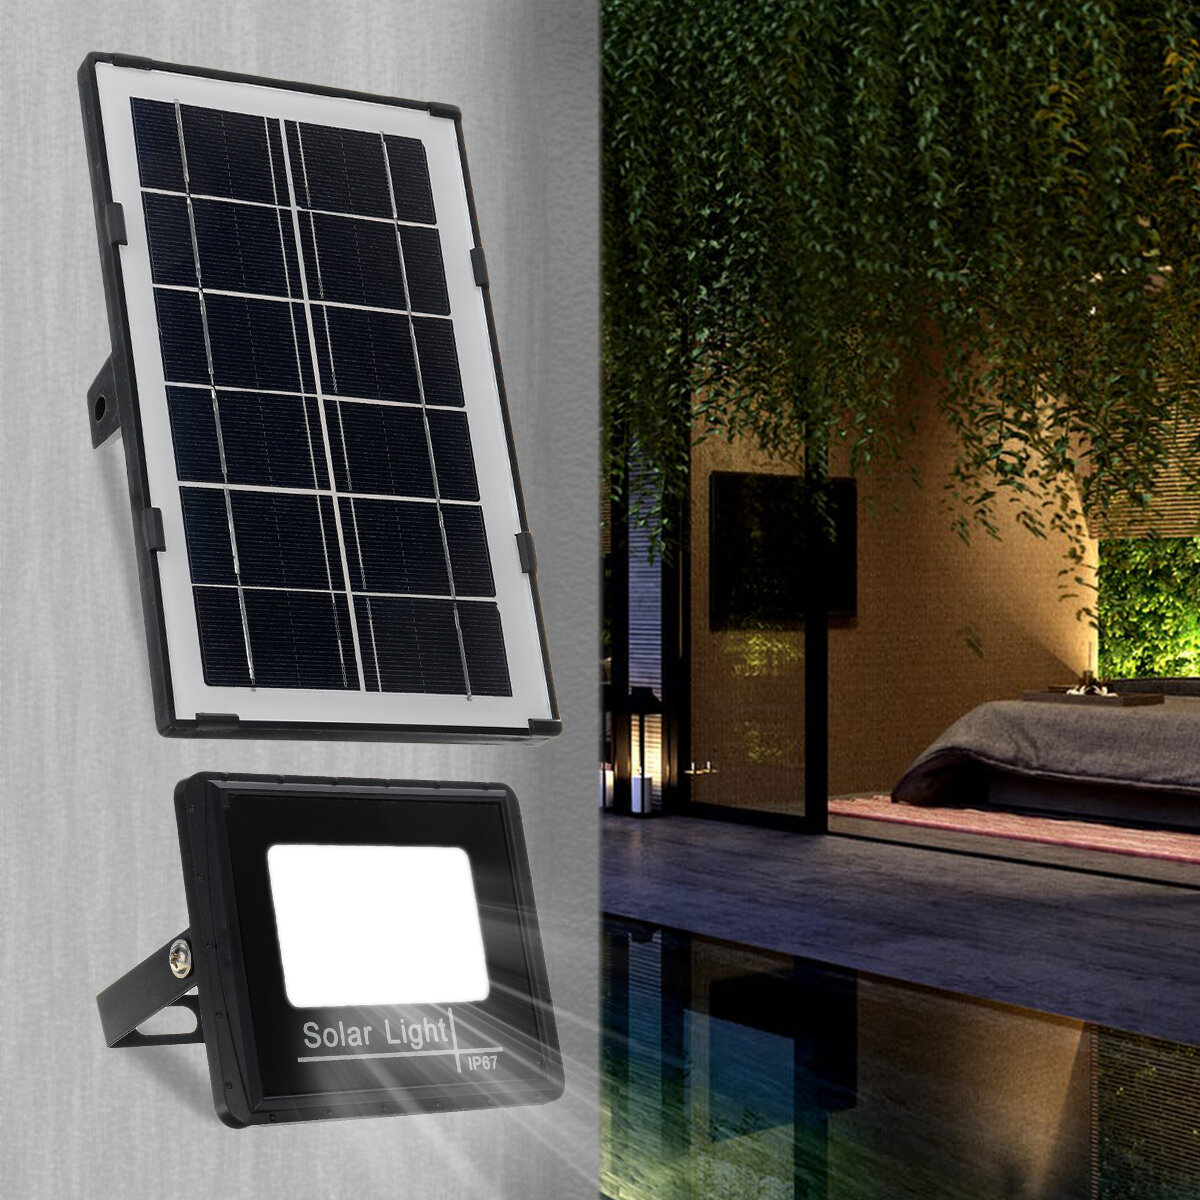 

30W 27LED Solar Powered Flood Light Outdoor Garden Wall Lamp Waterproof + Remote